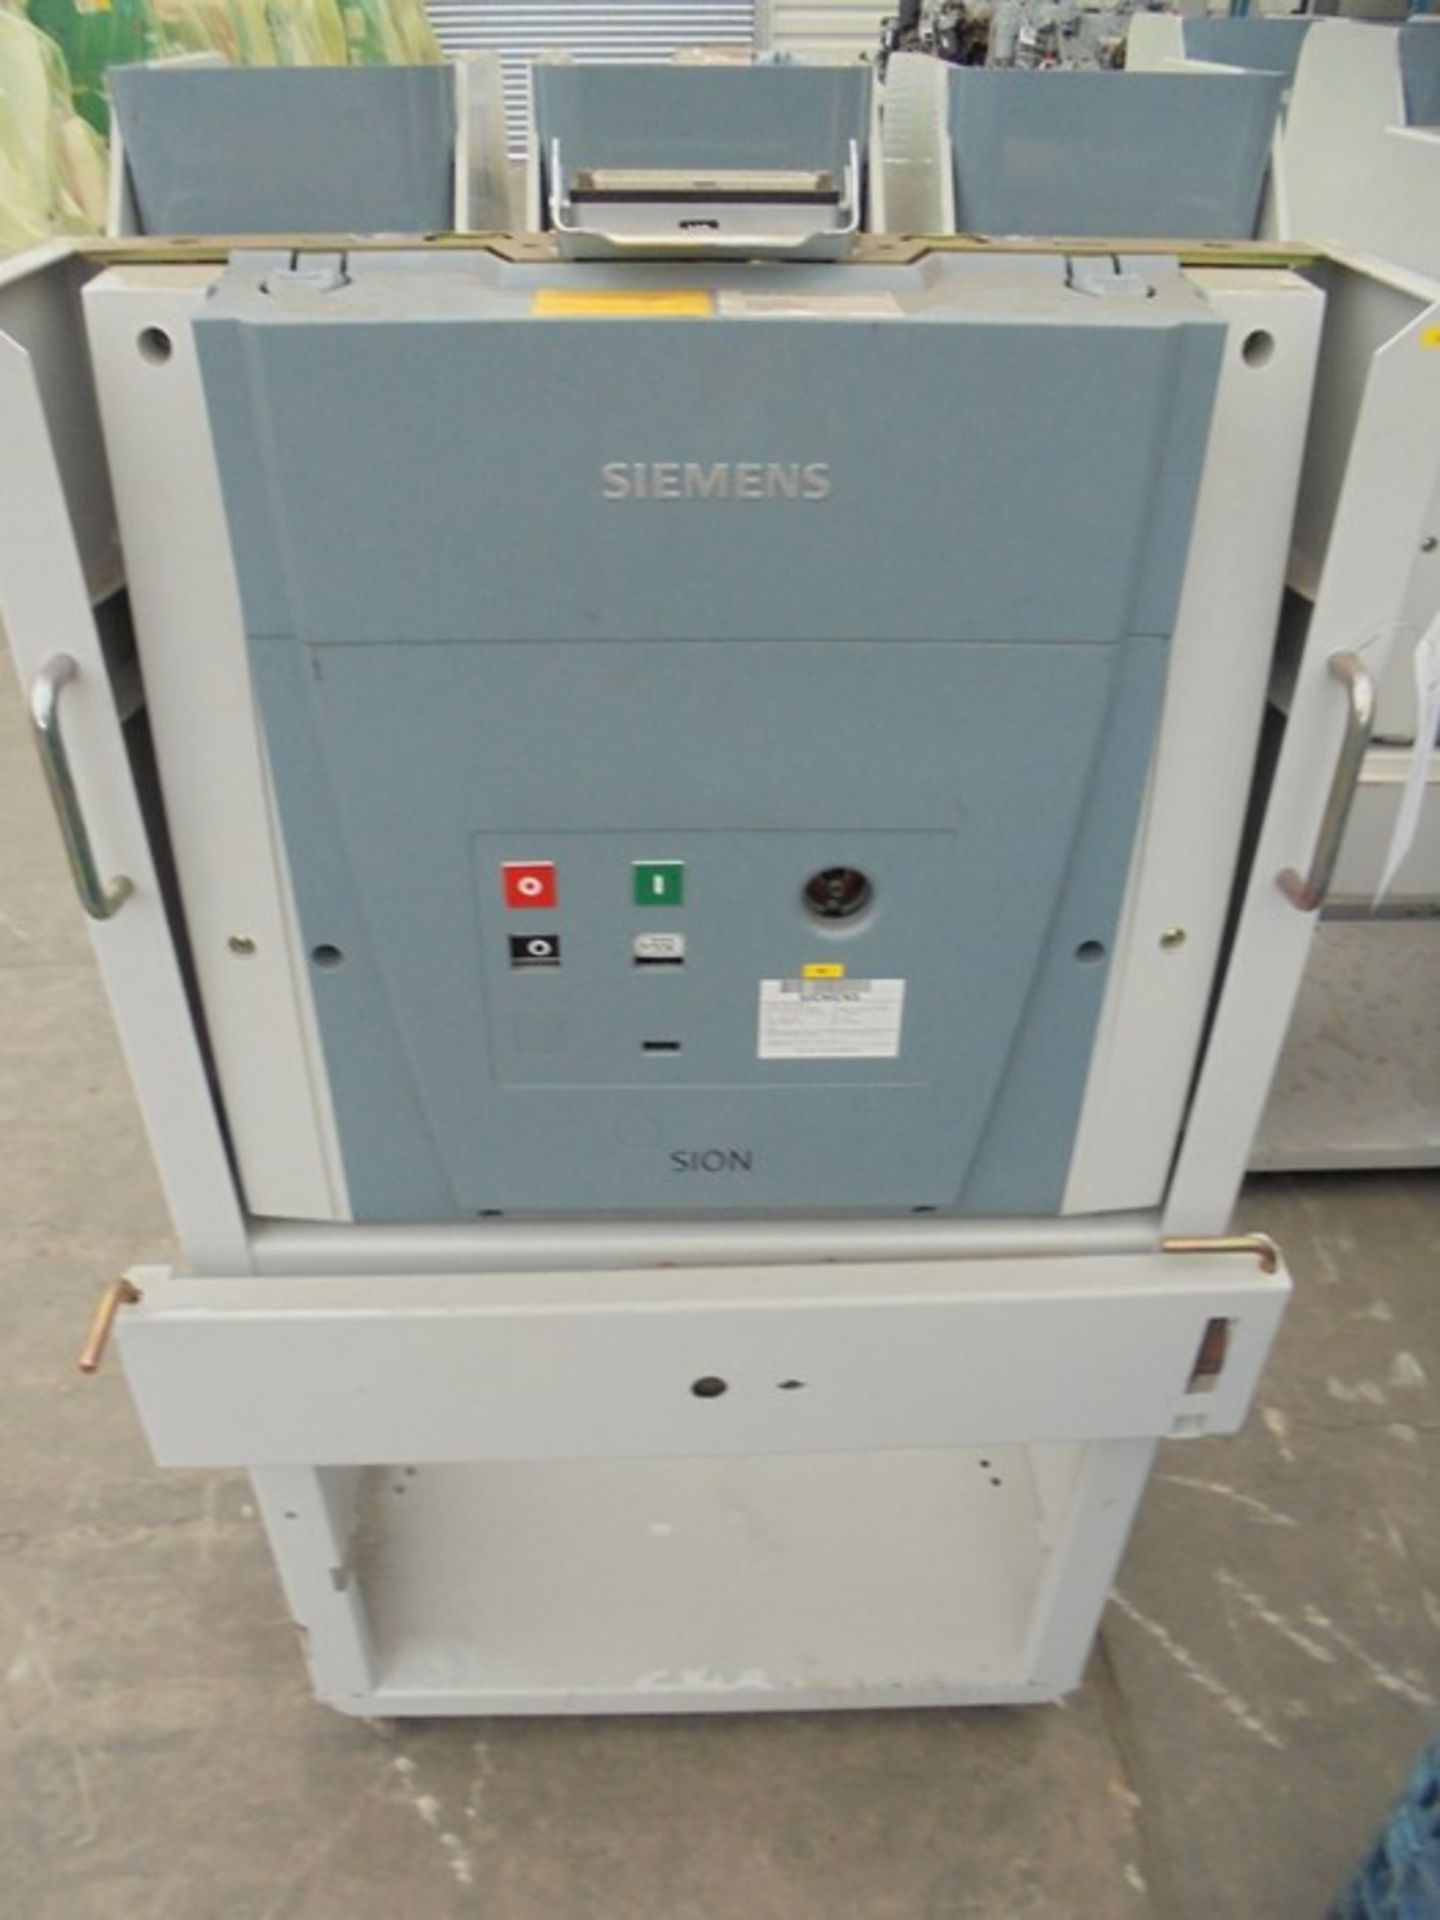 New Siemens Sion air breaker 1250amp at 14000volts.